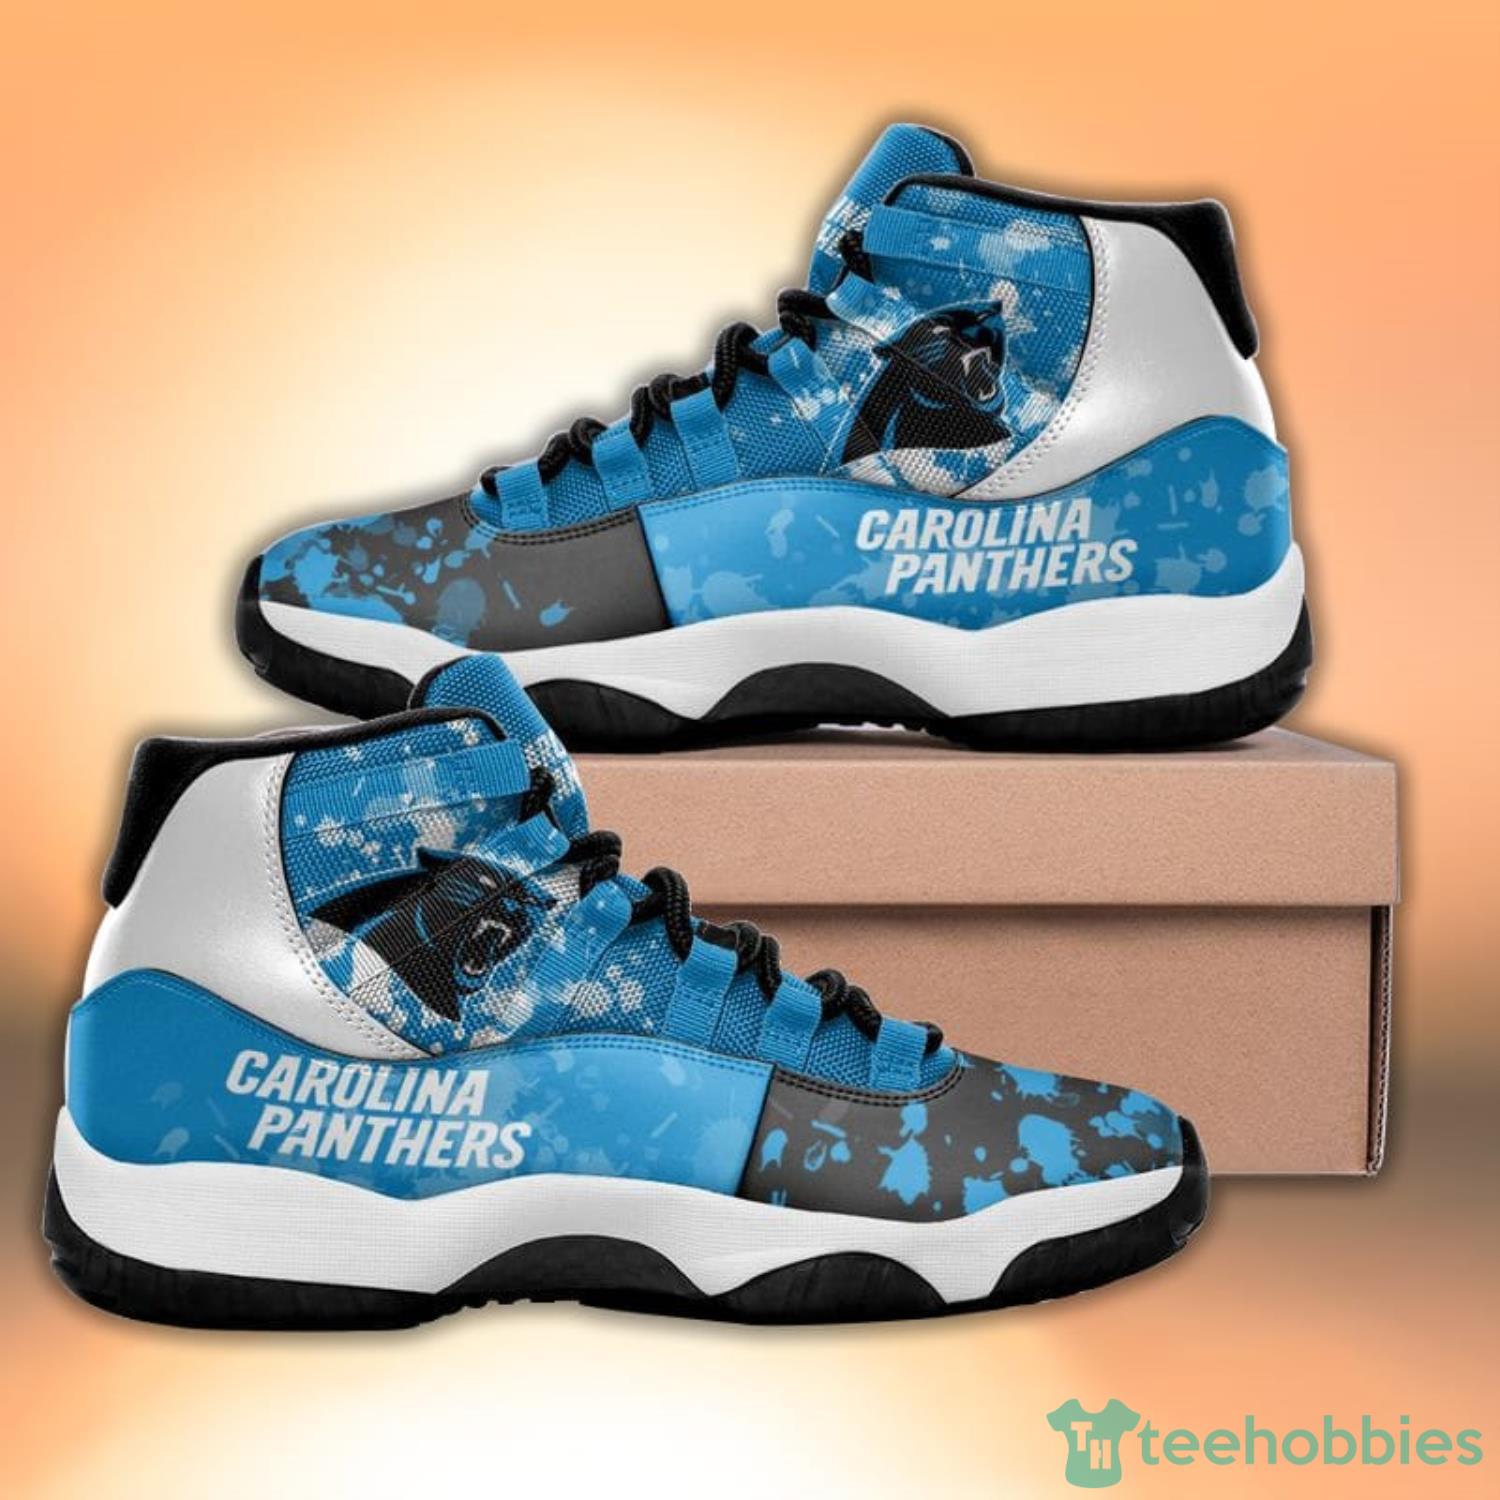 Carolina Panthers Fans Pattern Texture Style Sneaker Air Jordan 11 Shoes